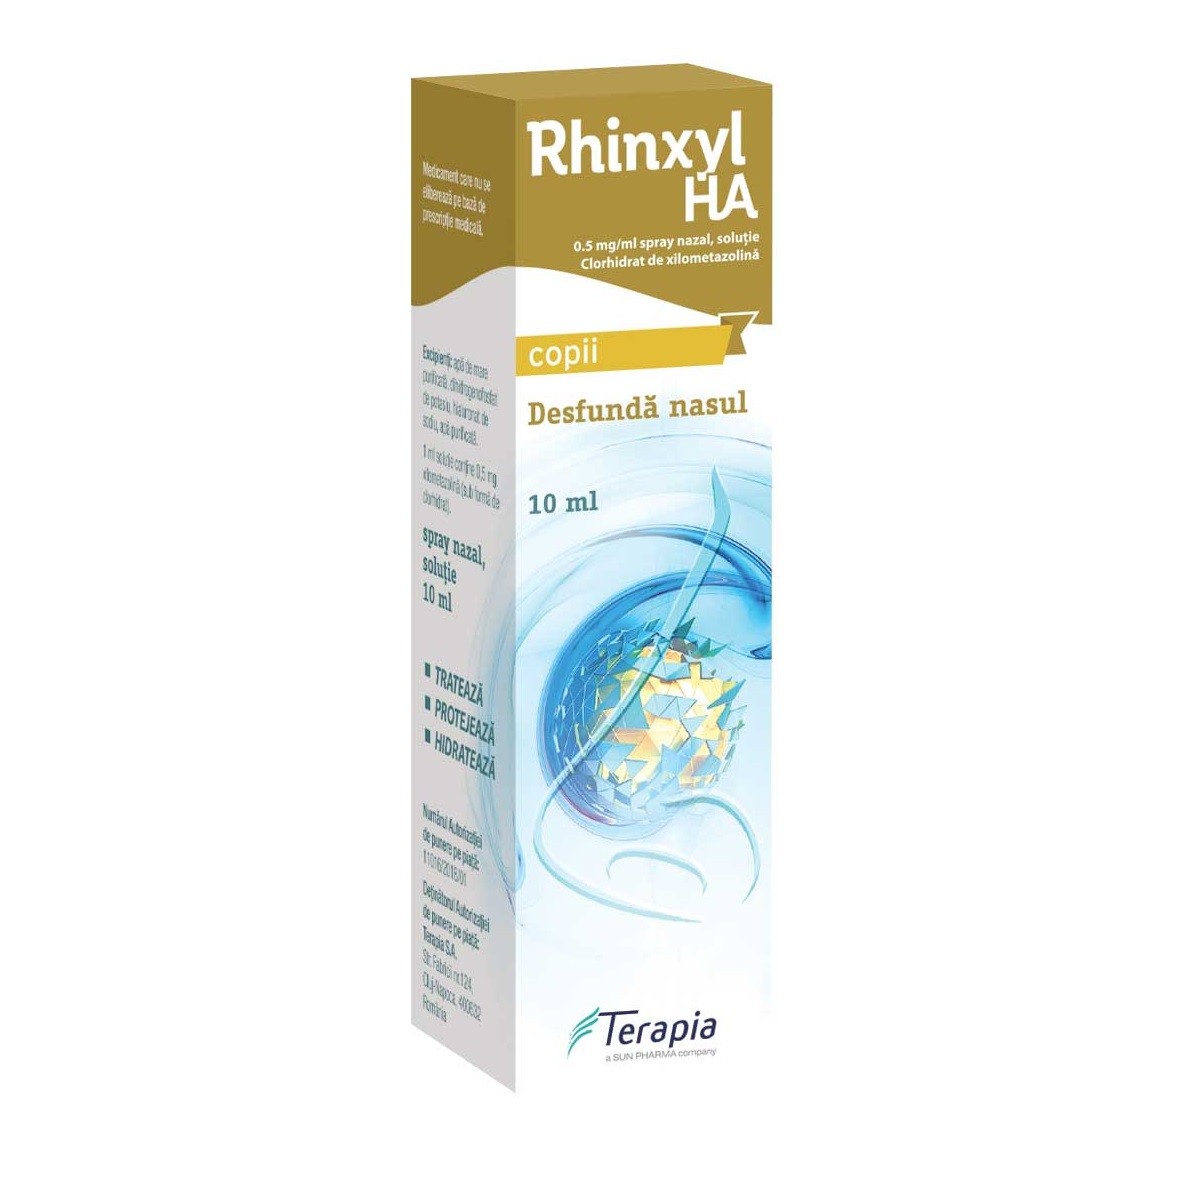 Medicamente fără prescripție medicală - RHINXYL HA 0,5 mg/ml x 1 SPRAY NAZ.,SOL. 0,5mg/ml TERAPIA S A, axafarm.ro